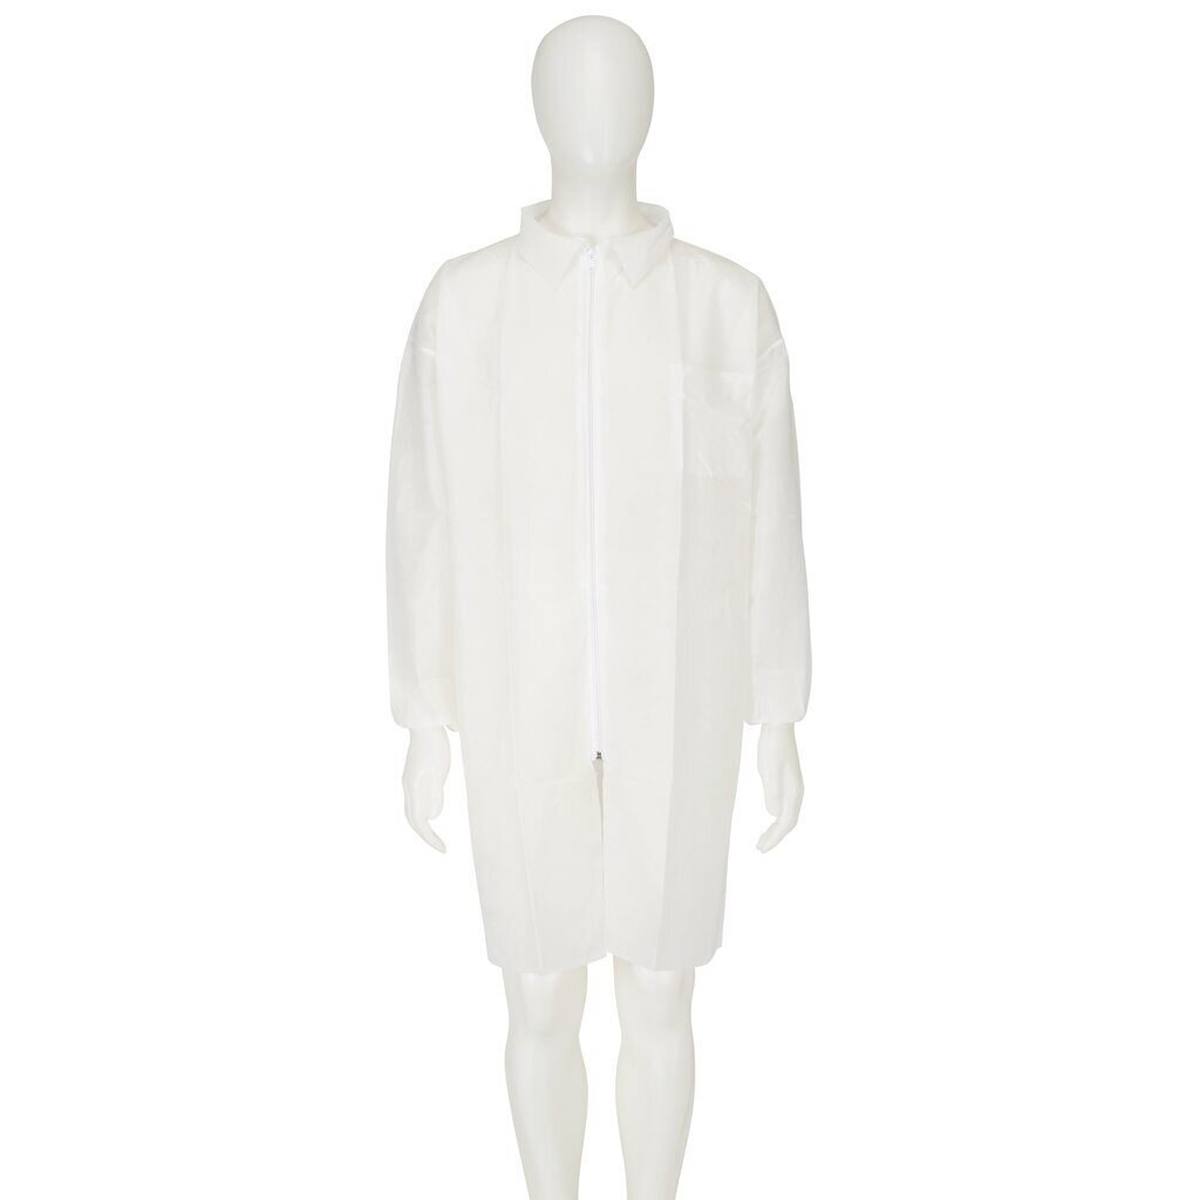 3M 4400 Abrigo, blanco, talla 2XL, material 100% polipropileno, transpirable, muy ligero, con cremallera